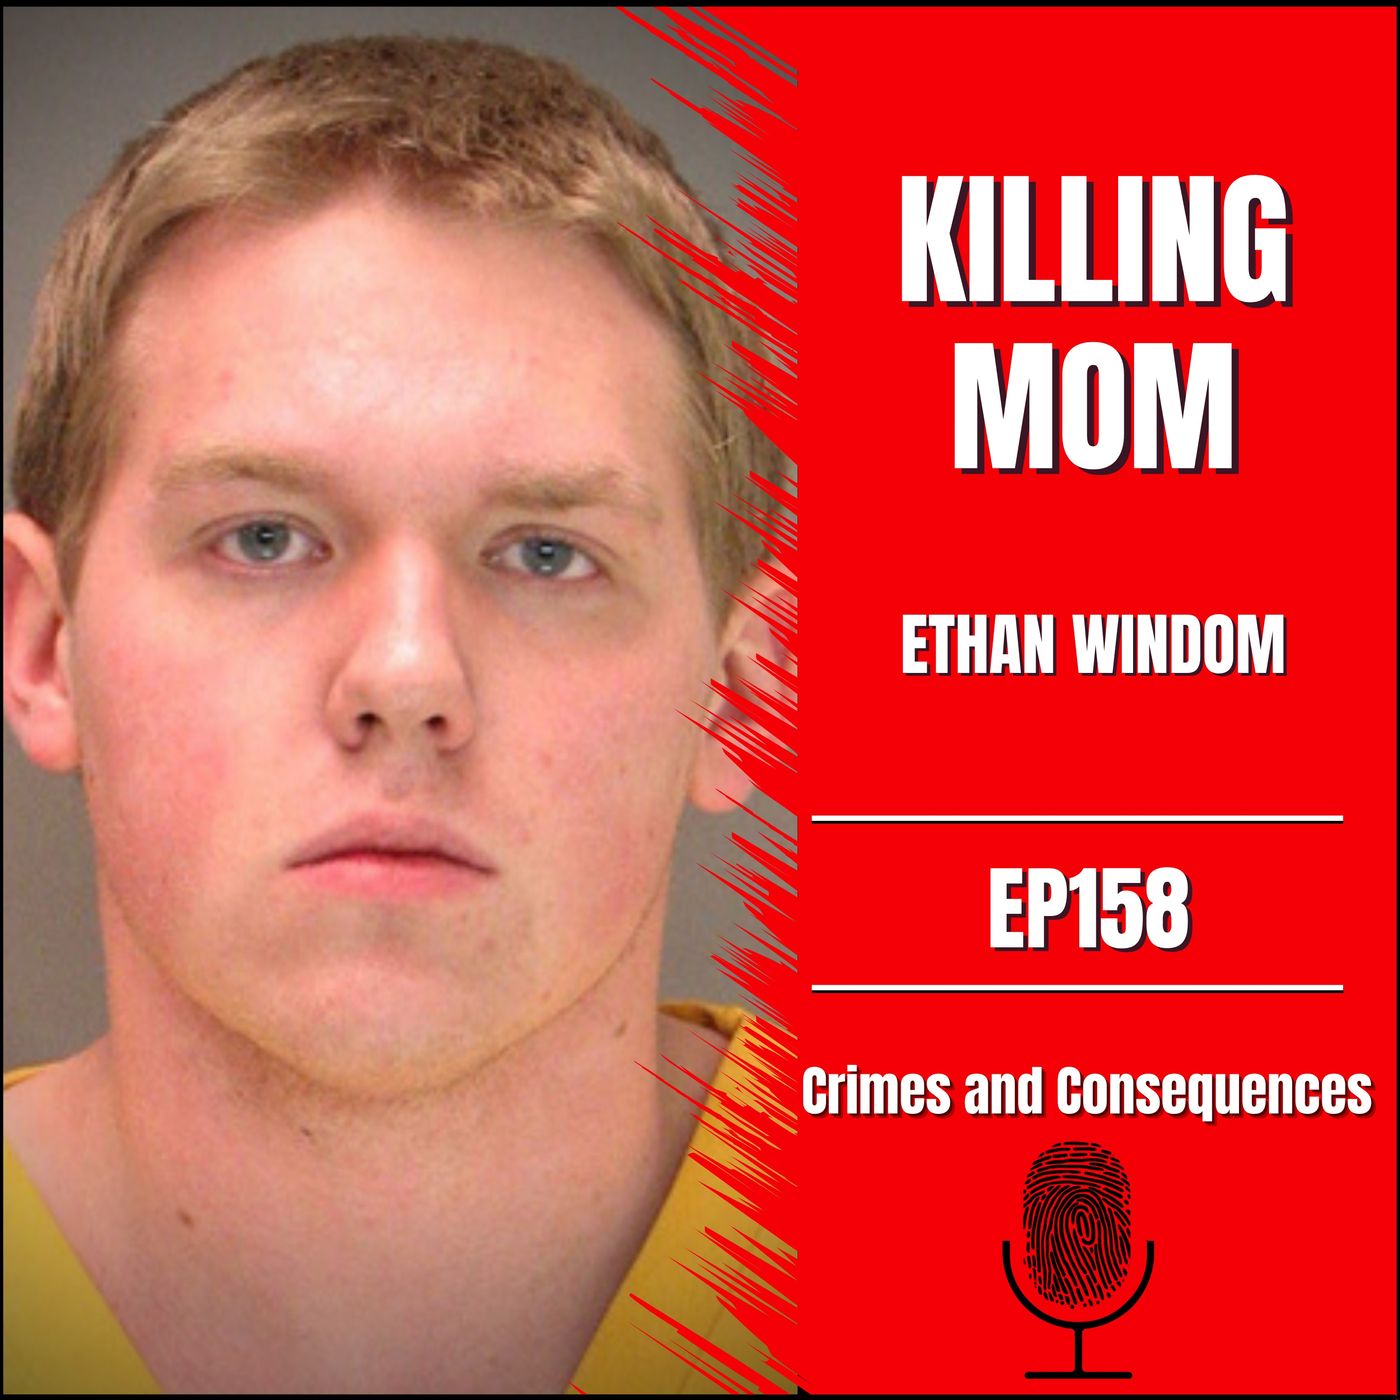 EP158: KILLING MOM - THE MURDER OF JUDY WINDOM